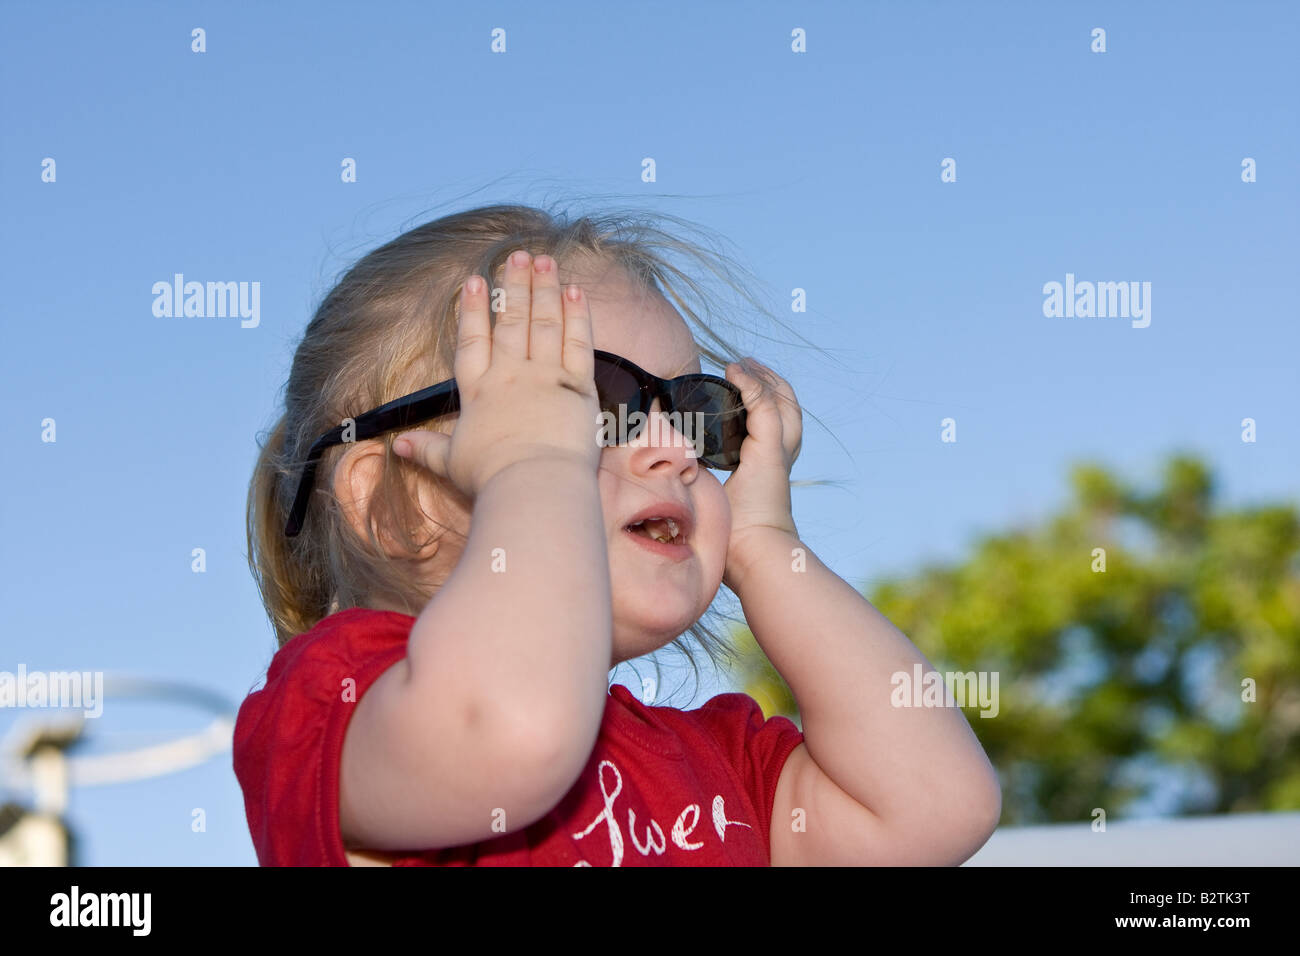 Female Toddler Model Wearing Large, Dark Sunglasses Stock Photo